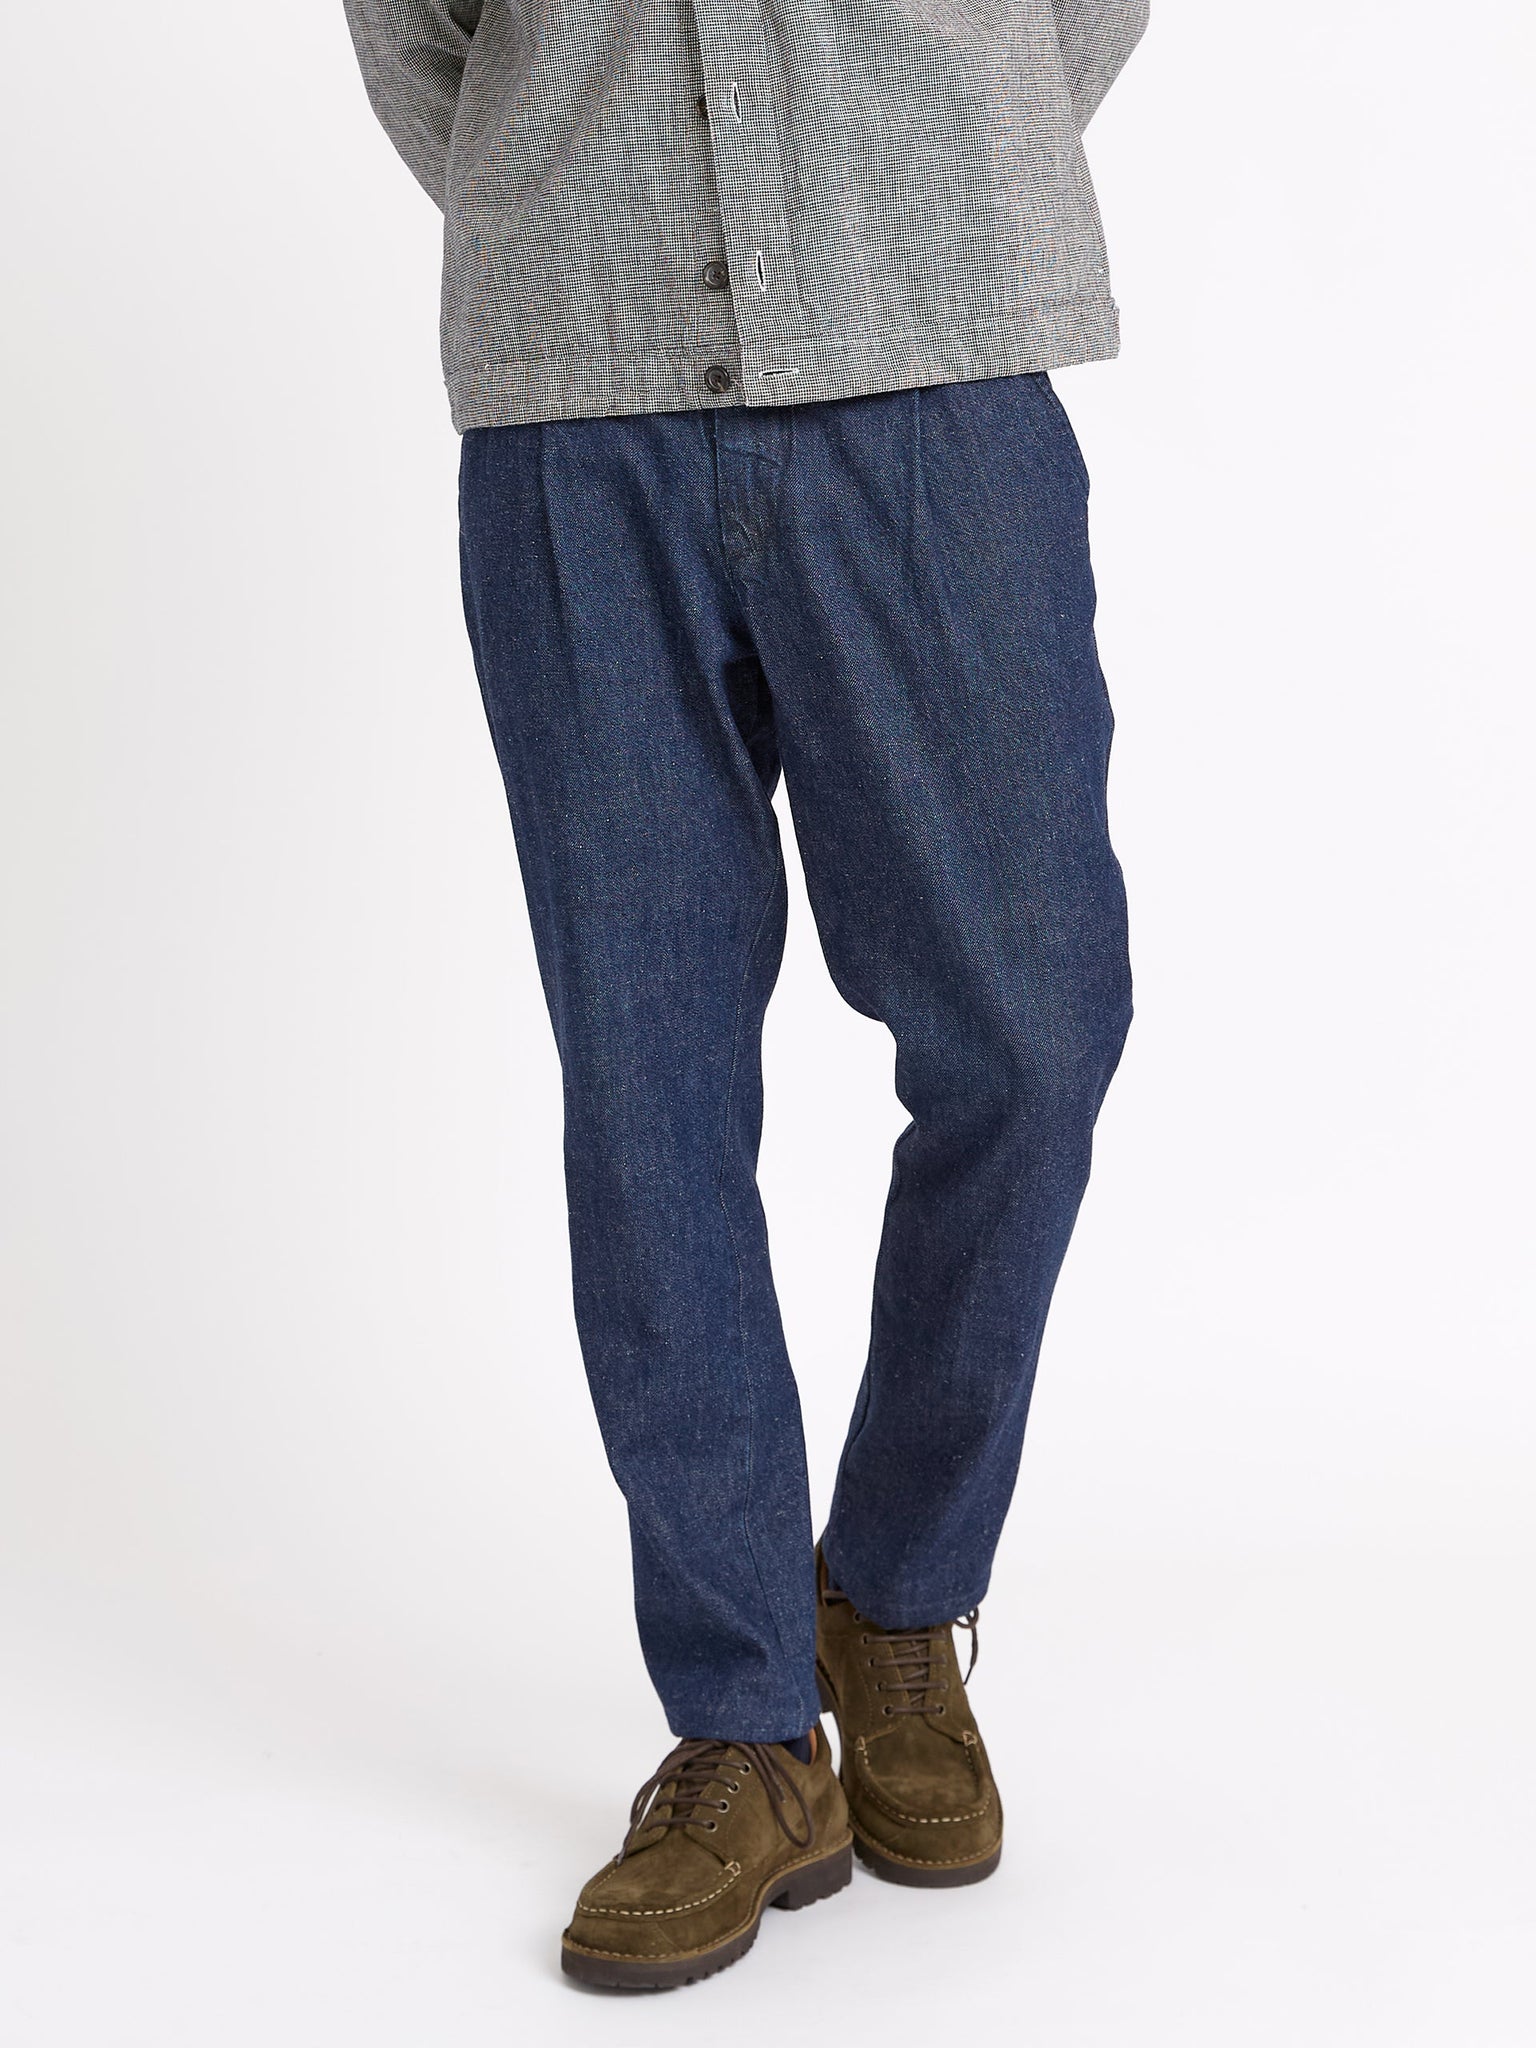 Oliver Spencer Morton Pleated Trousers Burnham Denim Indigo Blue